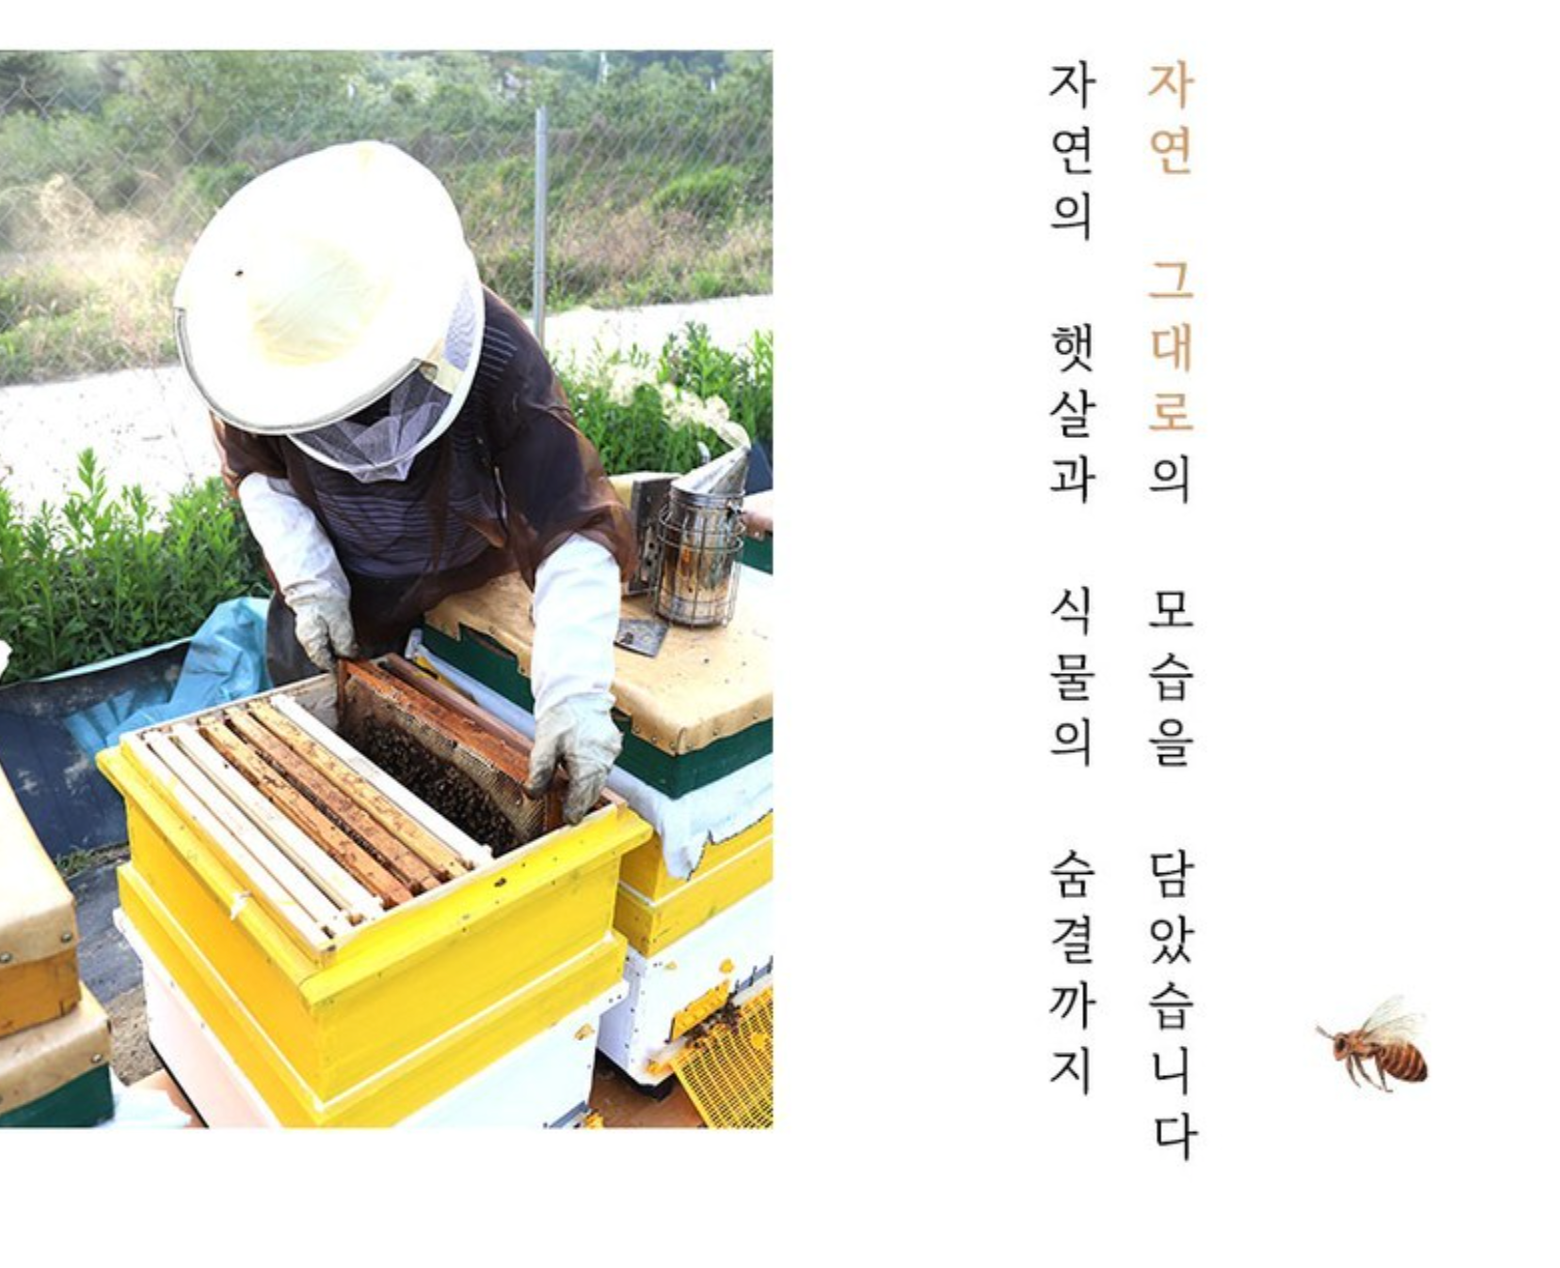 Premium Korean Honey Sticks Set |Acacia Honey, Wildflower Honey, Chestnut Honey| 30 sticks